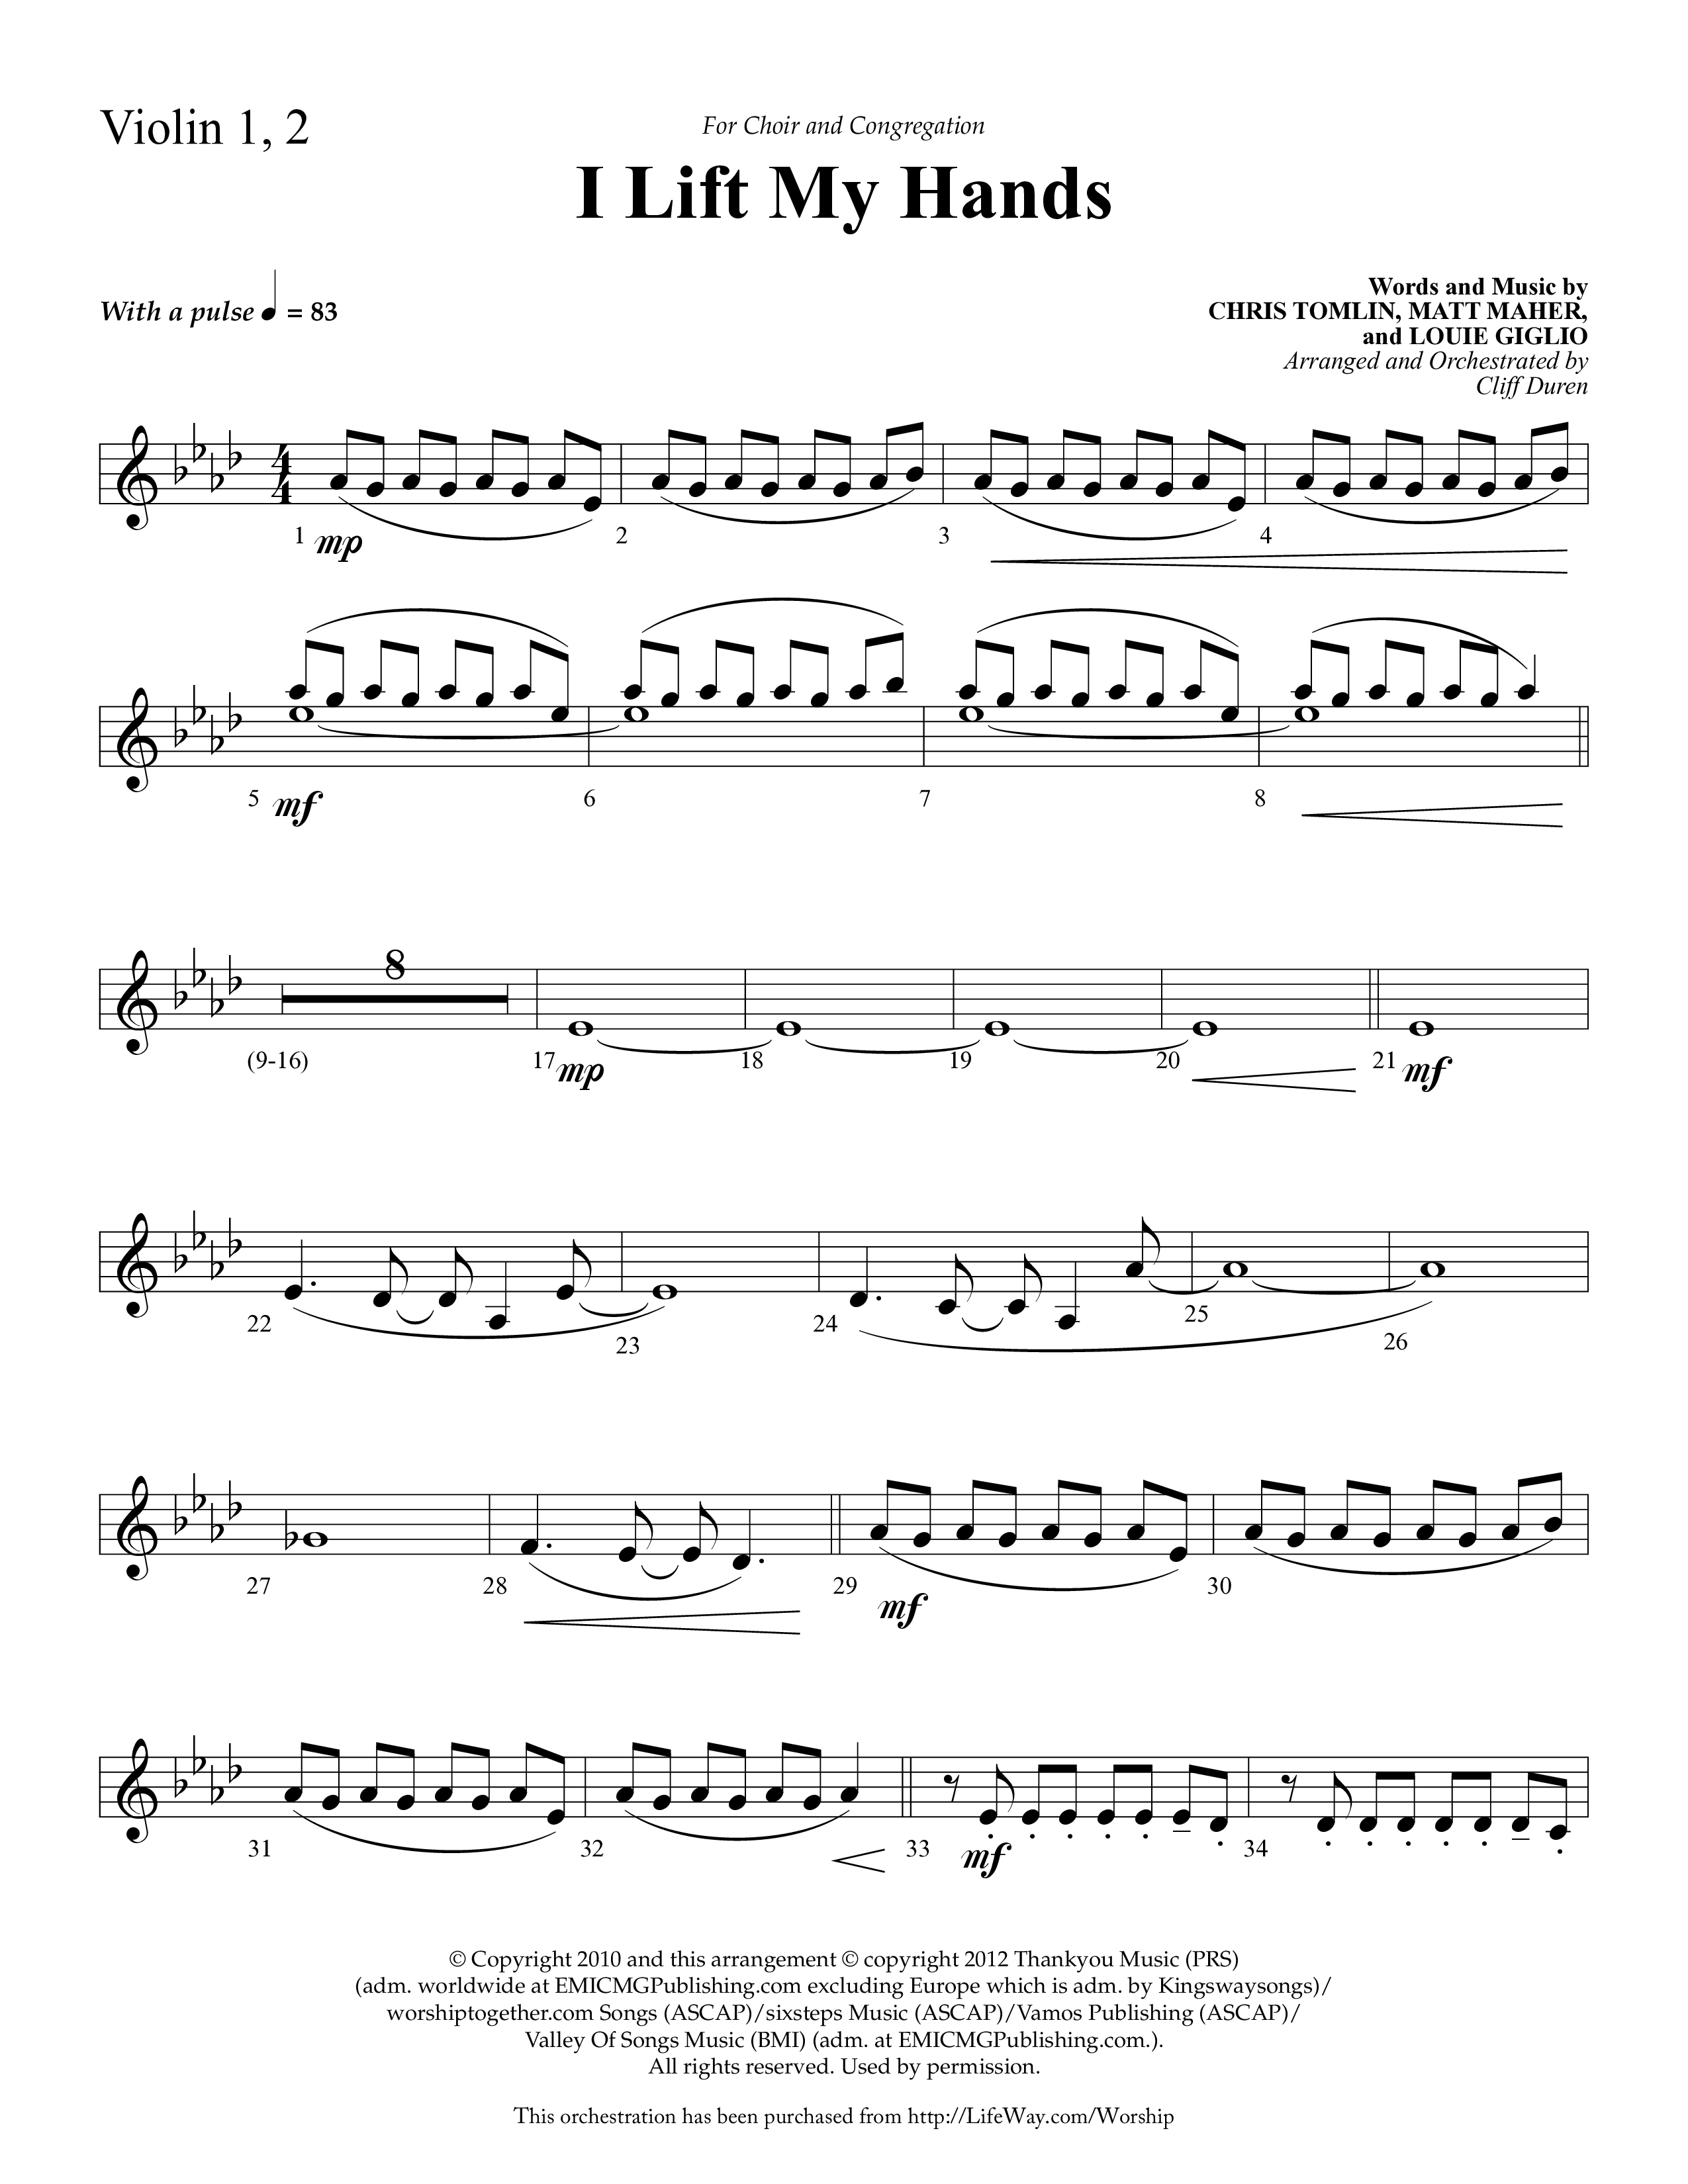 I Lift My Hands (Choral Anthem SATB) Violin 1/2 (Lifeway Choral / Arr. Cliff Duren)